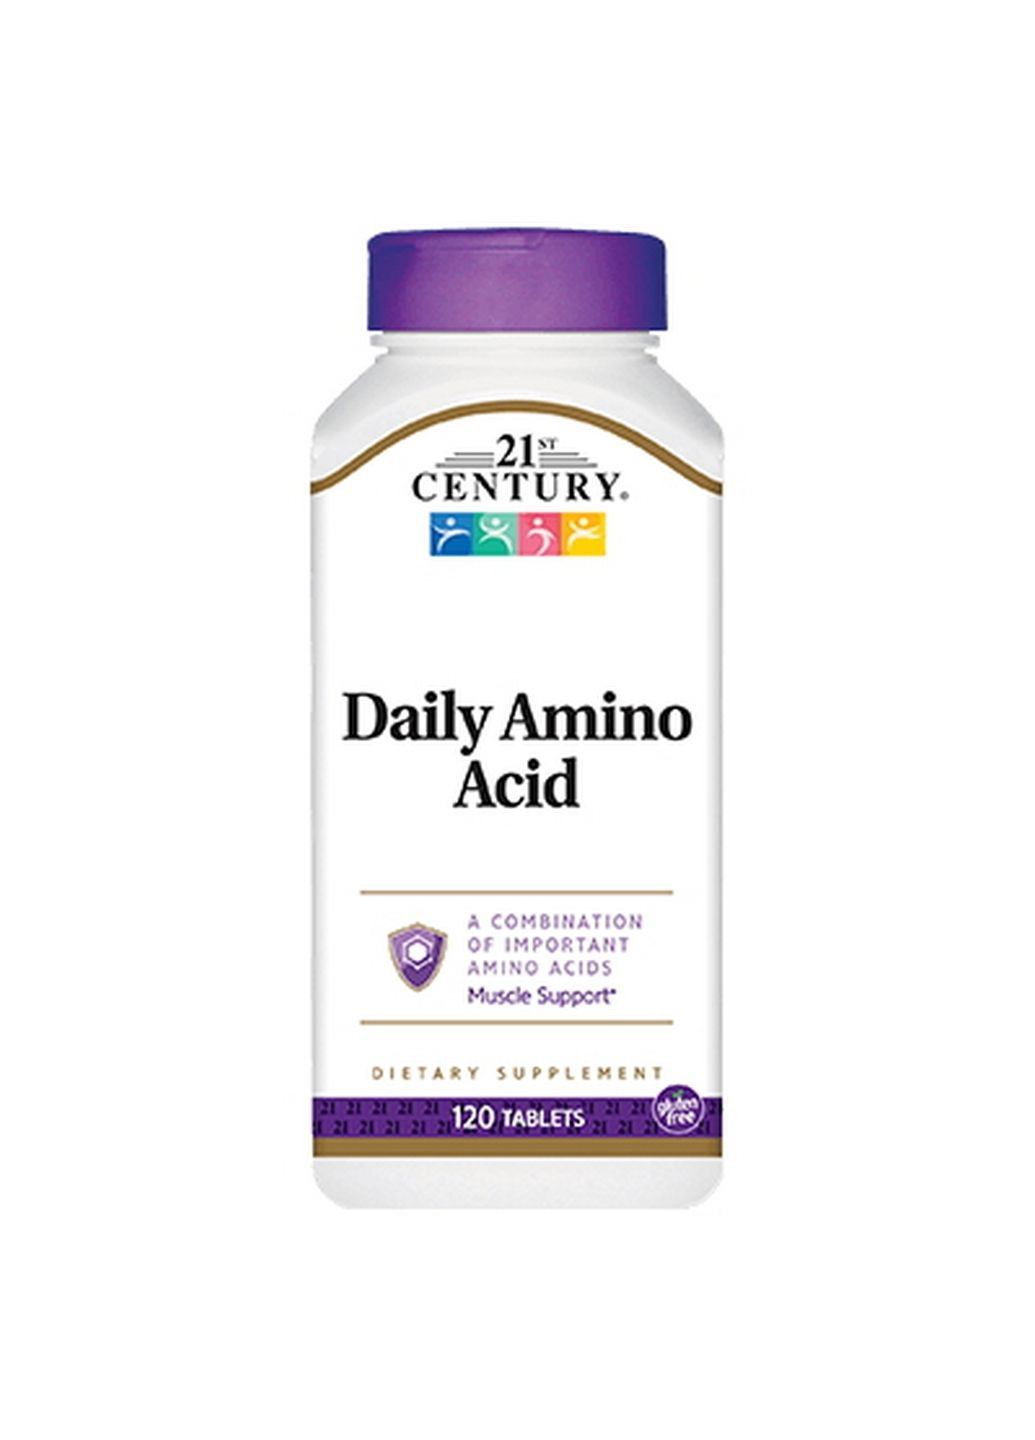 Аминокислота Daily Amino Acid, 120 таблеток 21st Century (293481362)